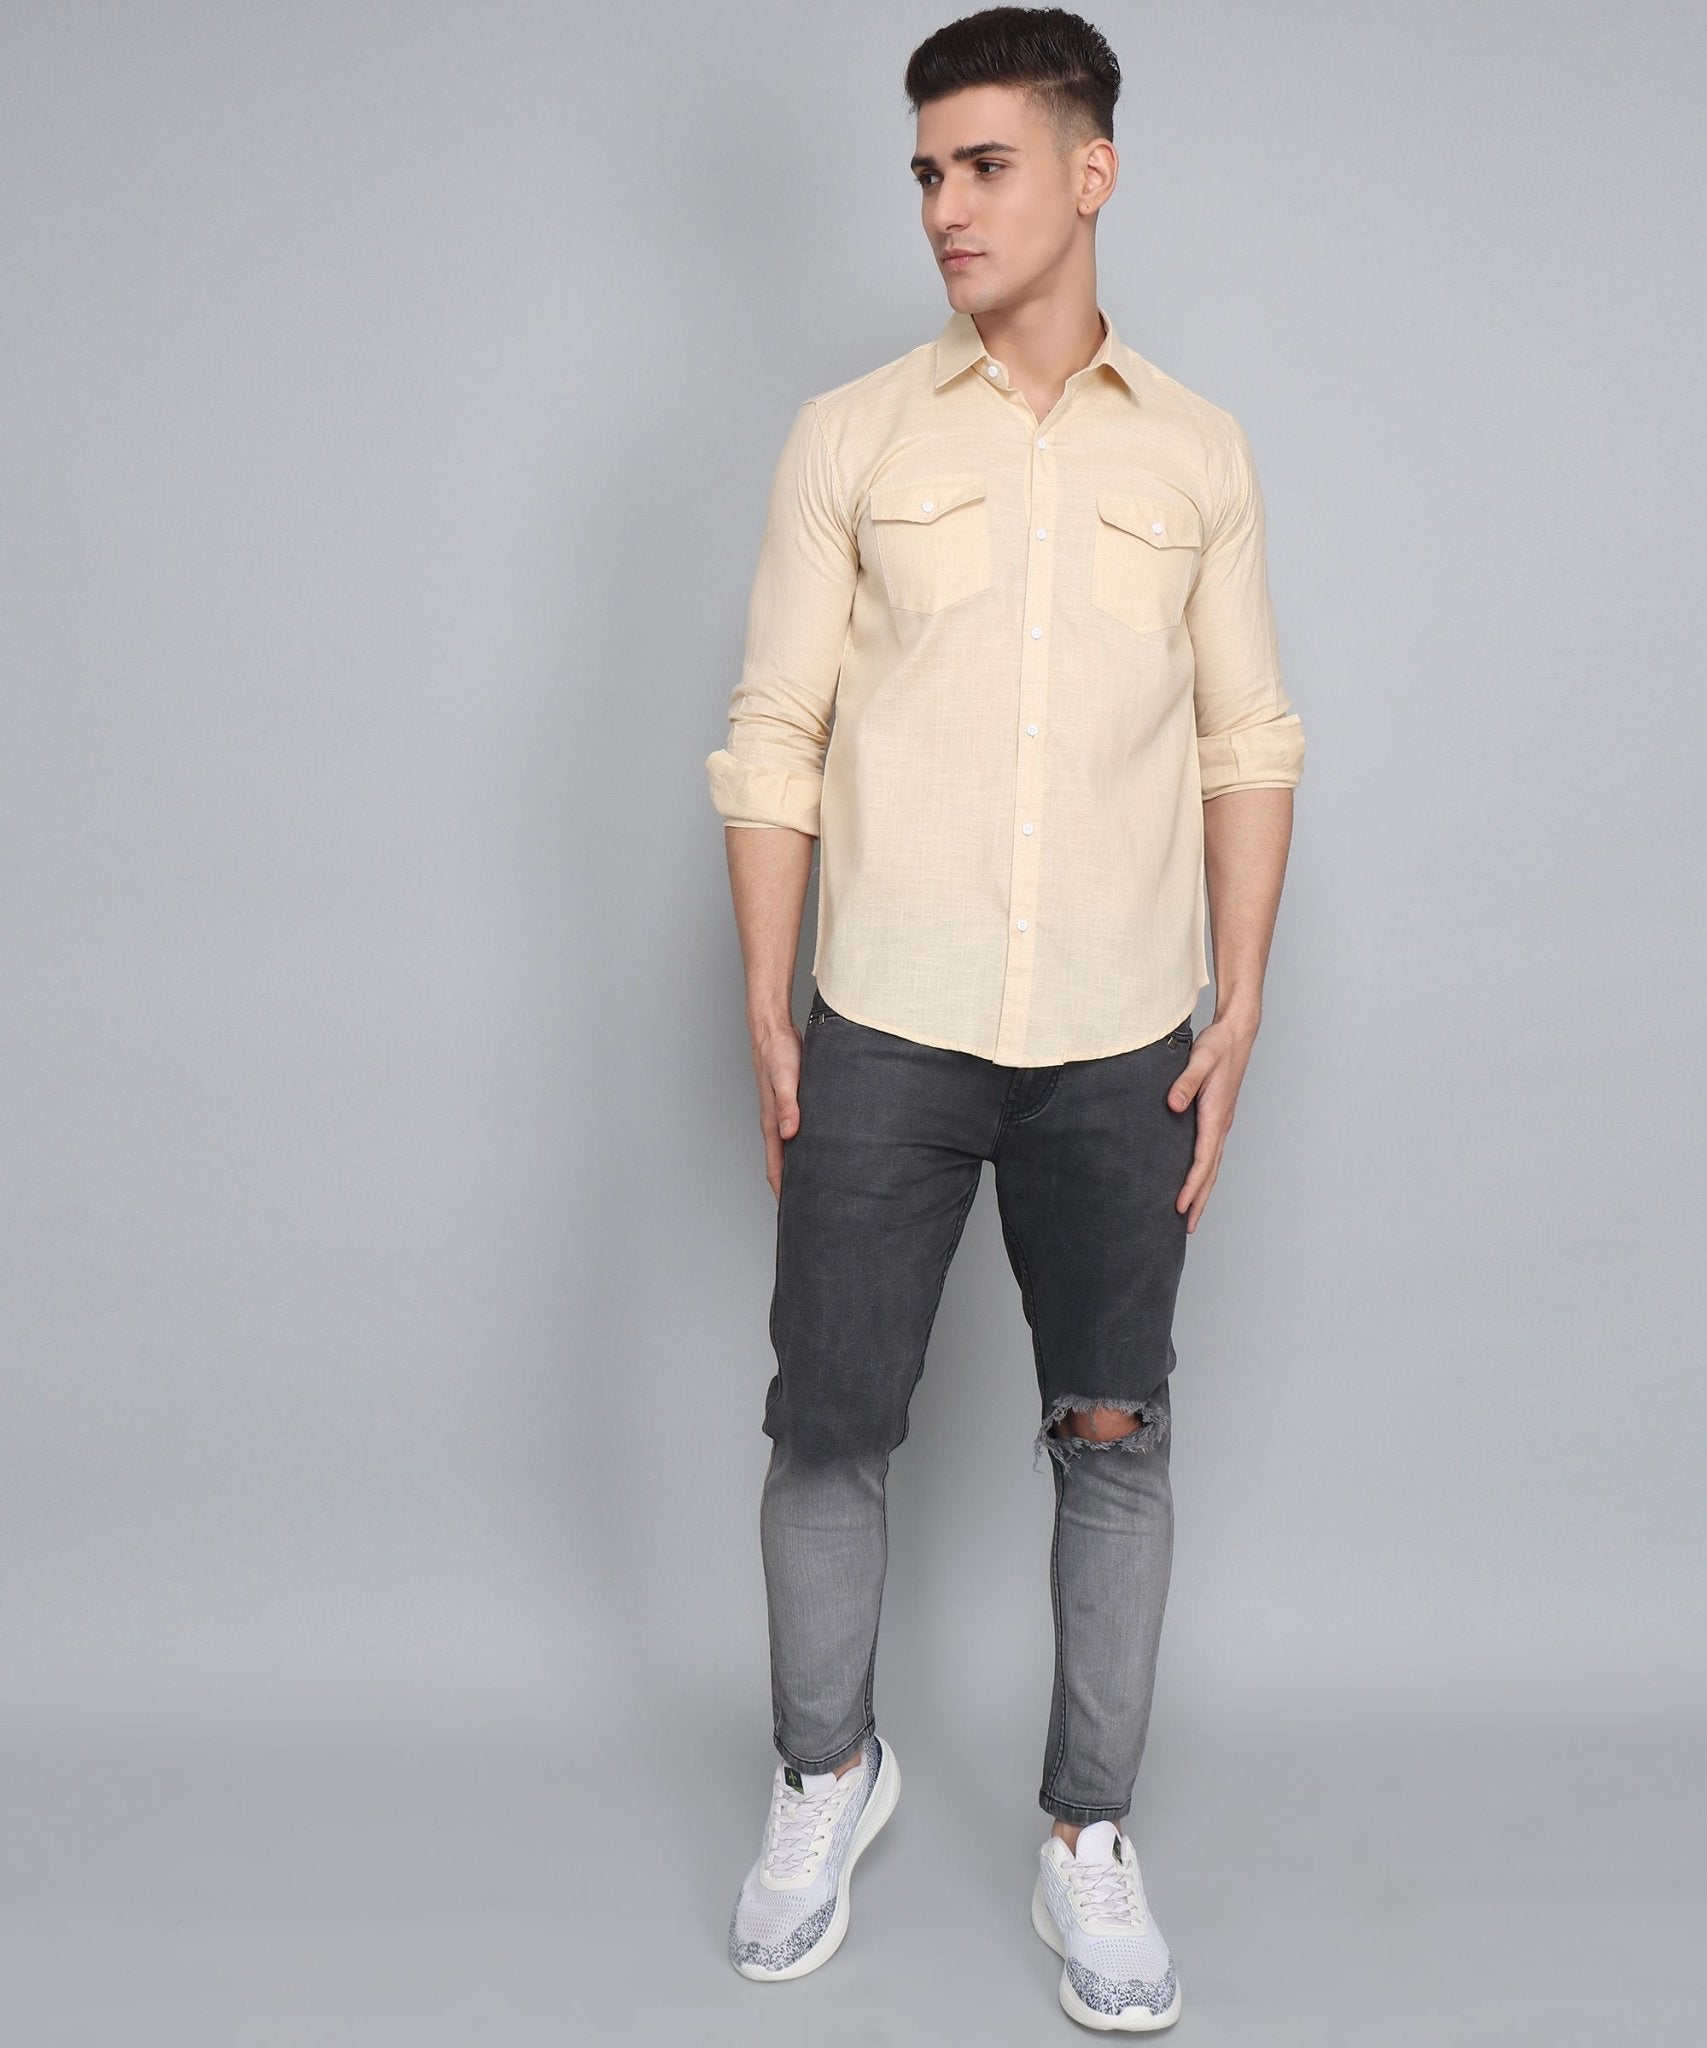 Men's Designer TryBuy Premium Cream Solid Cotton Linen Casual Double Pocket Shirt - TryBuy® USA🇺🇸